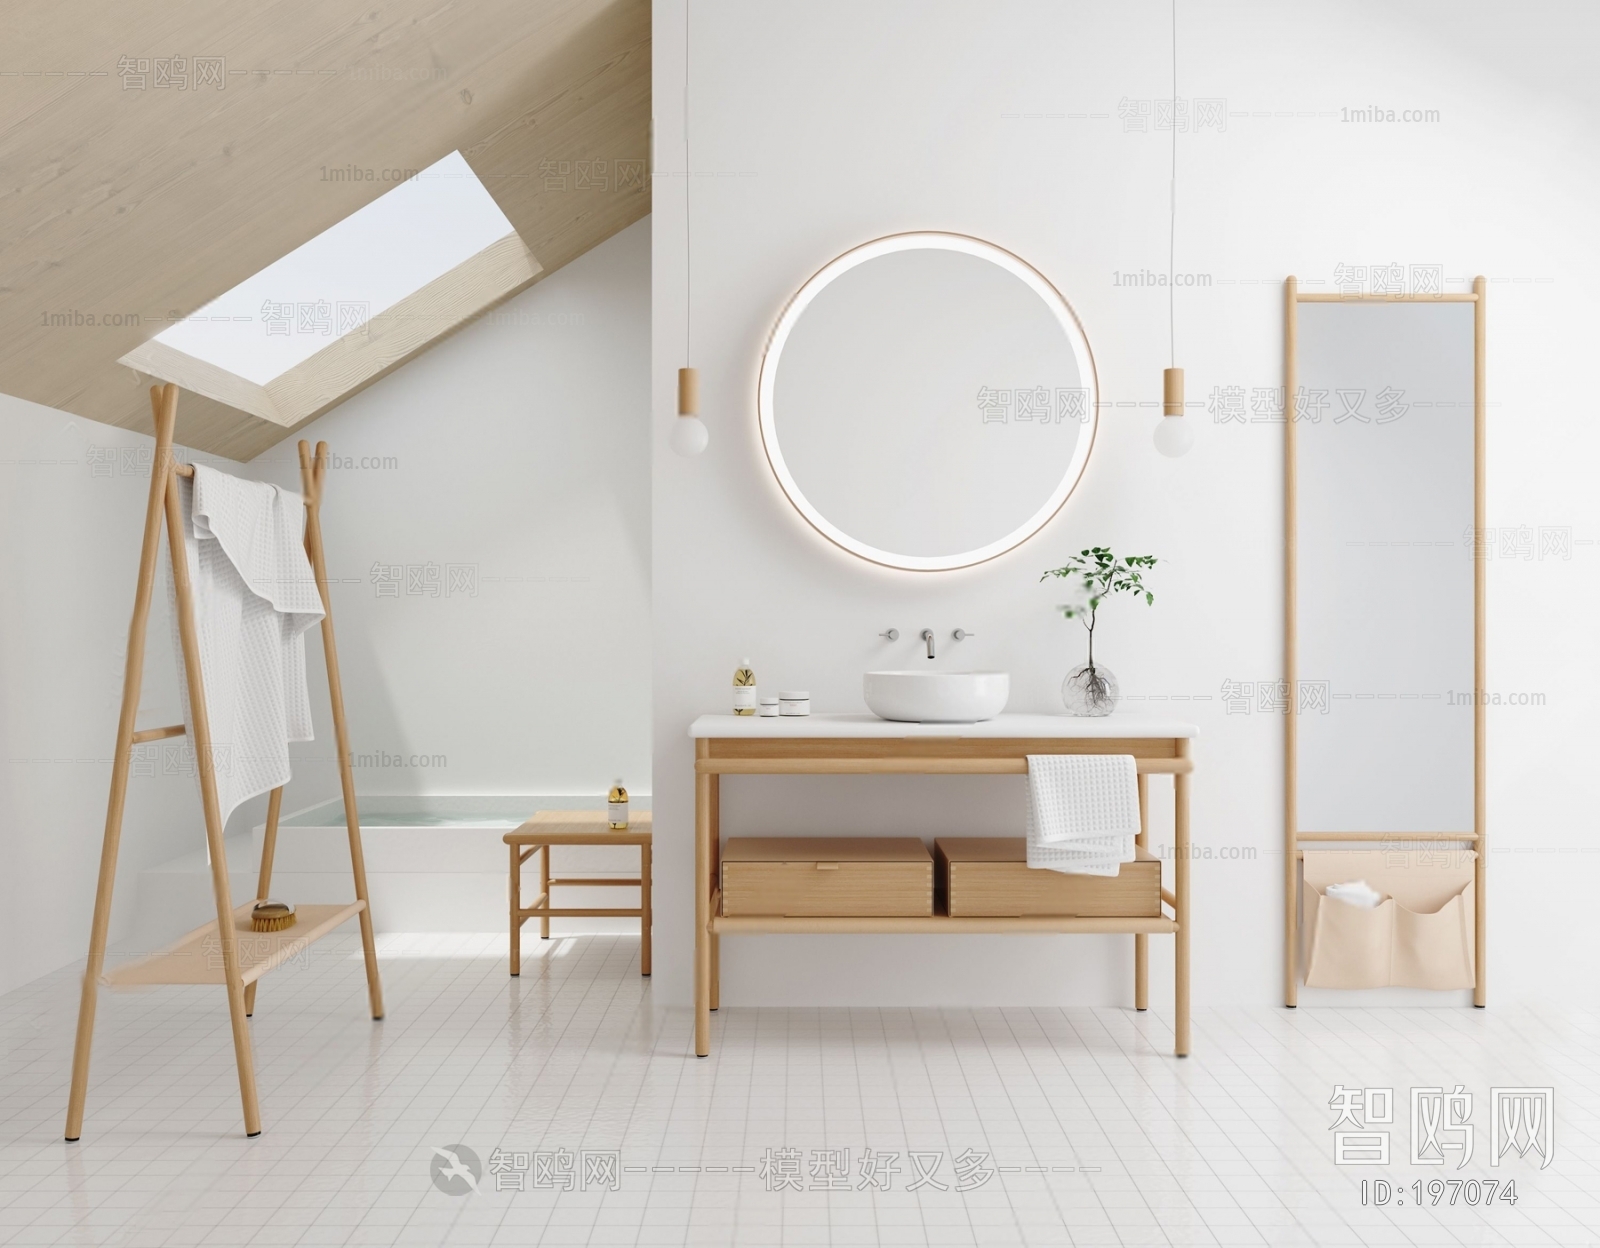 Nordic Style Bathroom Cabinet Rack